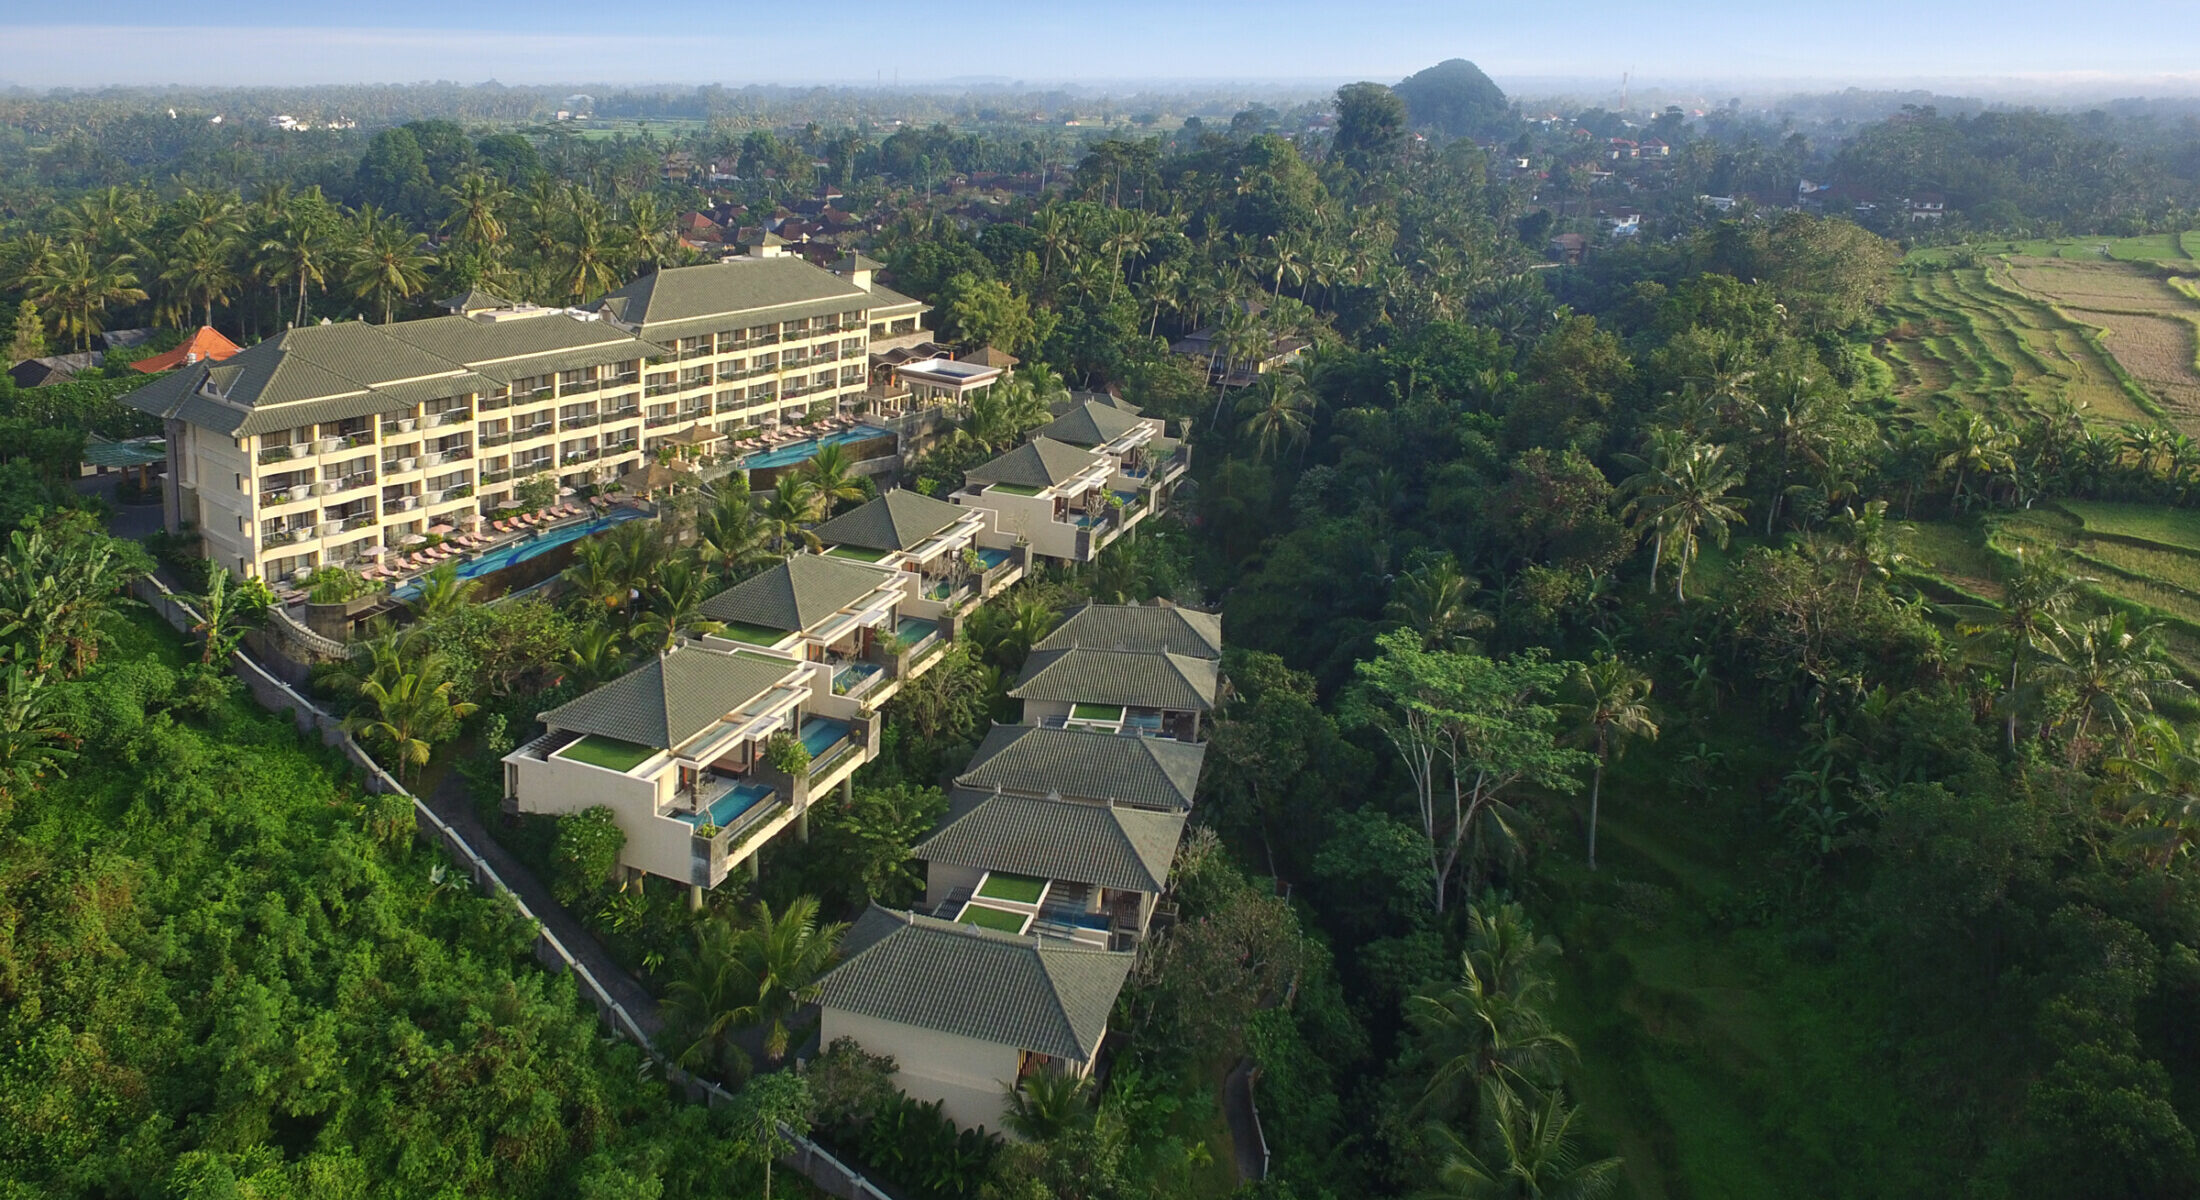 SereS Springs Resort & Spa Singakerta Ubud, a 5-Star Luxury Hotel Resort in Bali